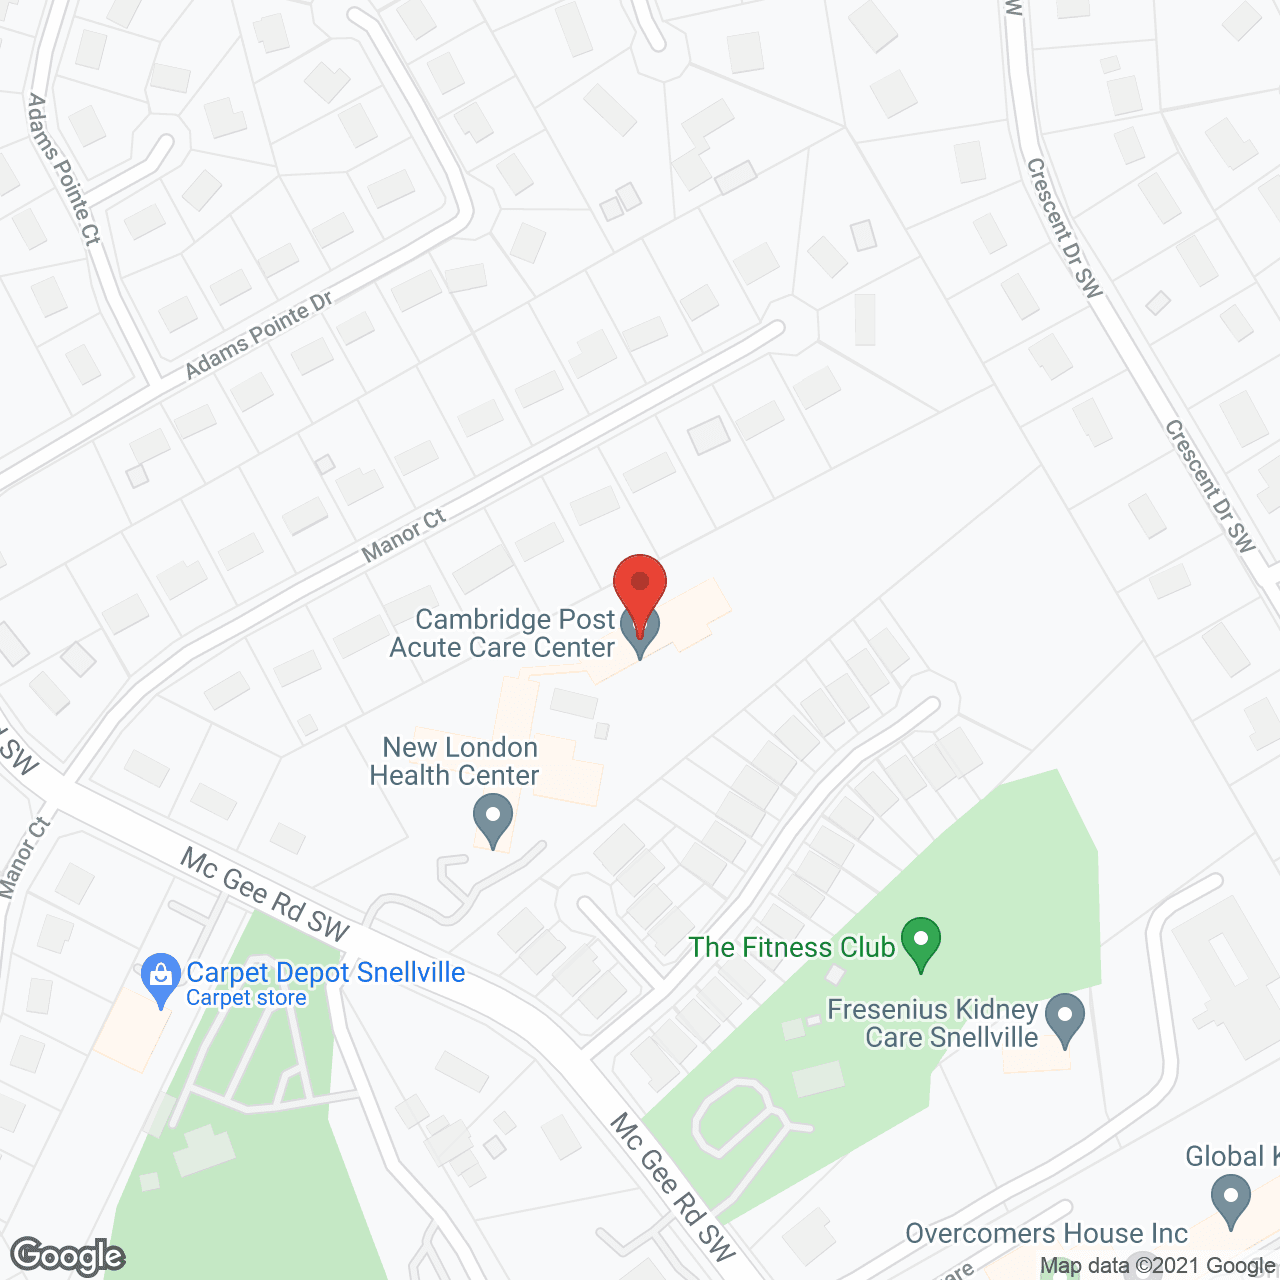 Cambridge Post-Acute Care Center in google map